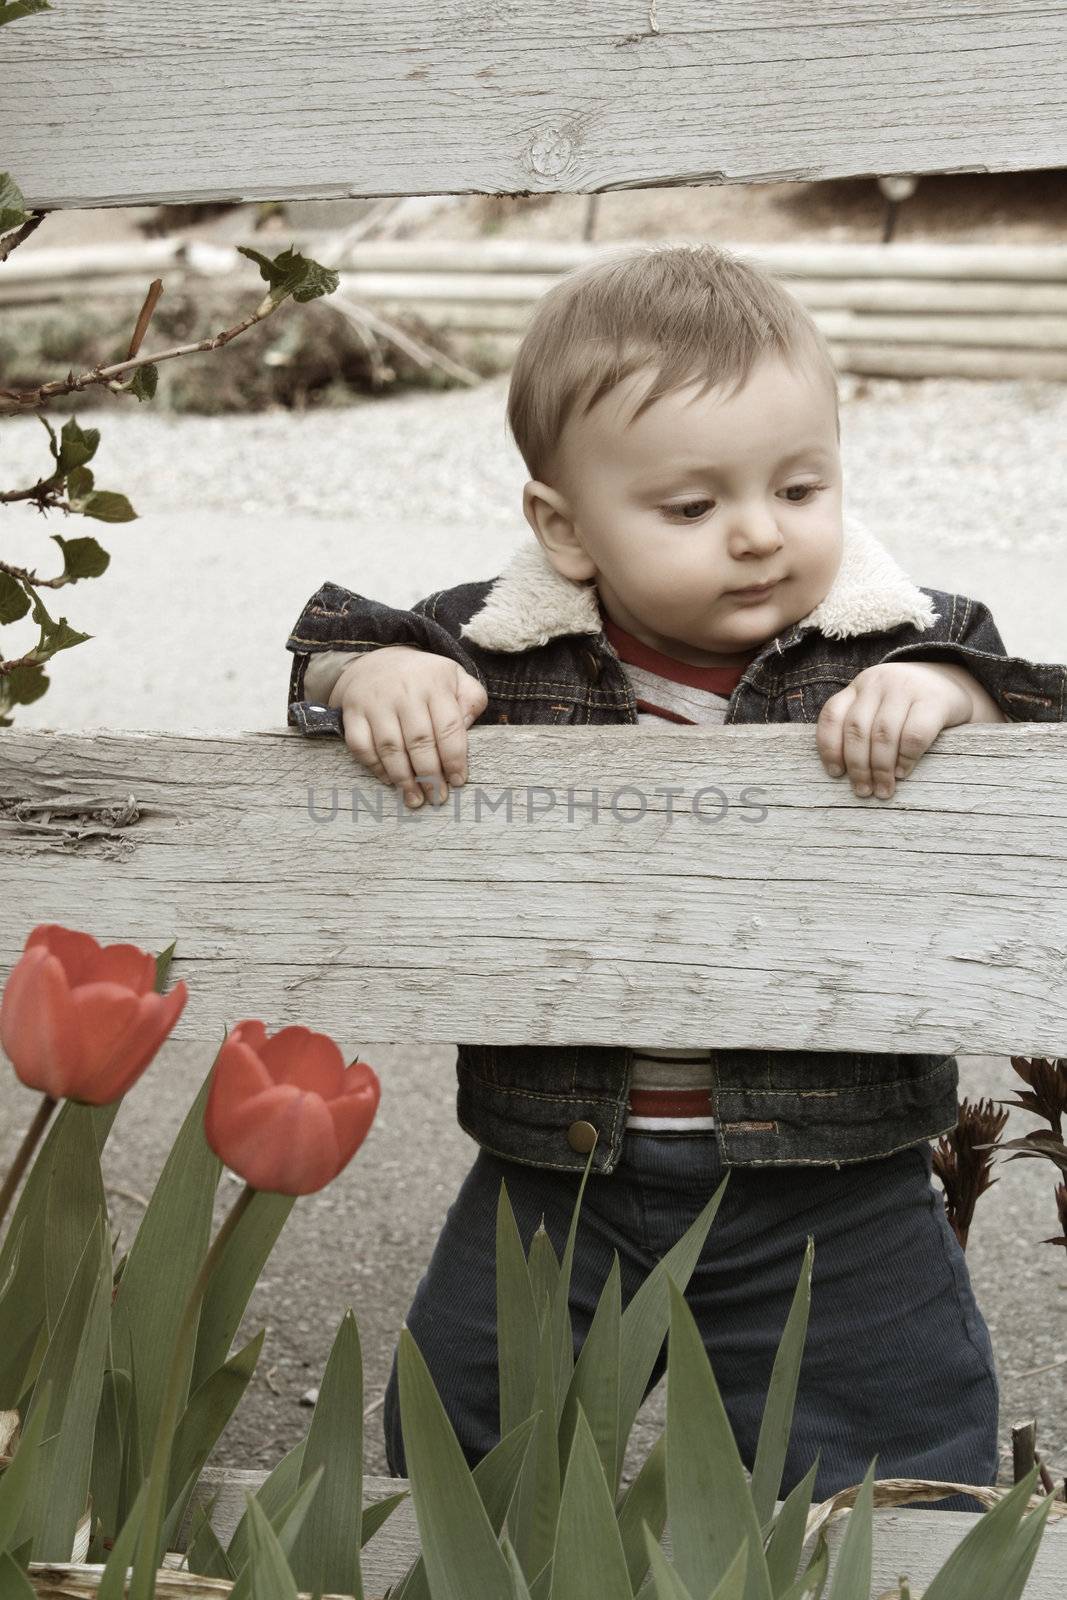 Cute baby boy standing in garden with flowers